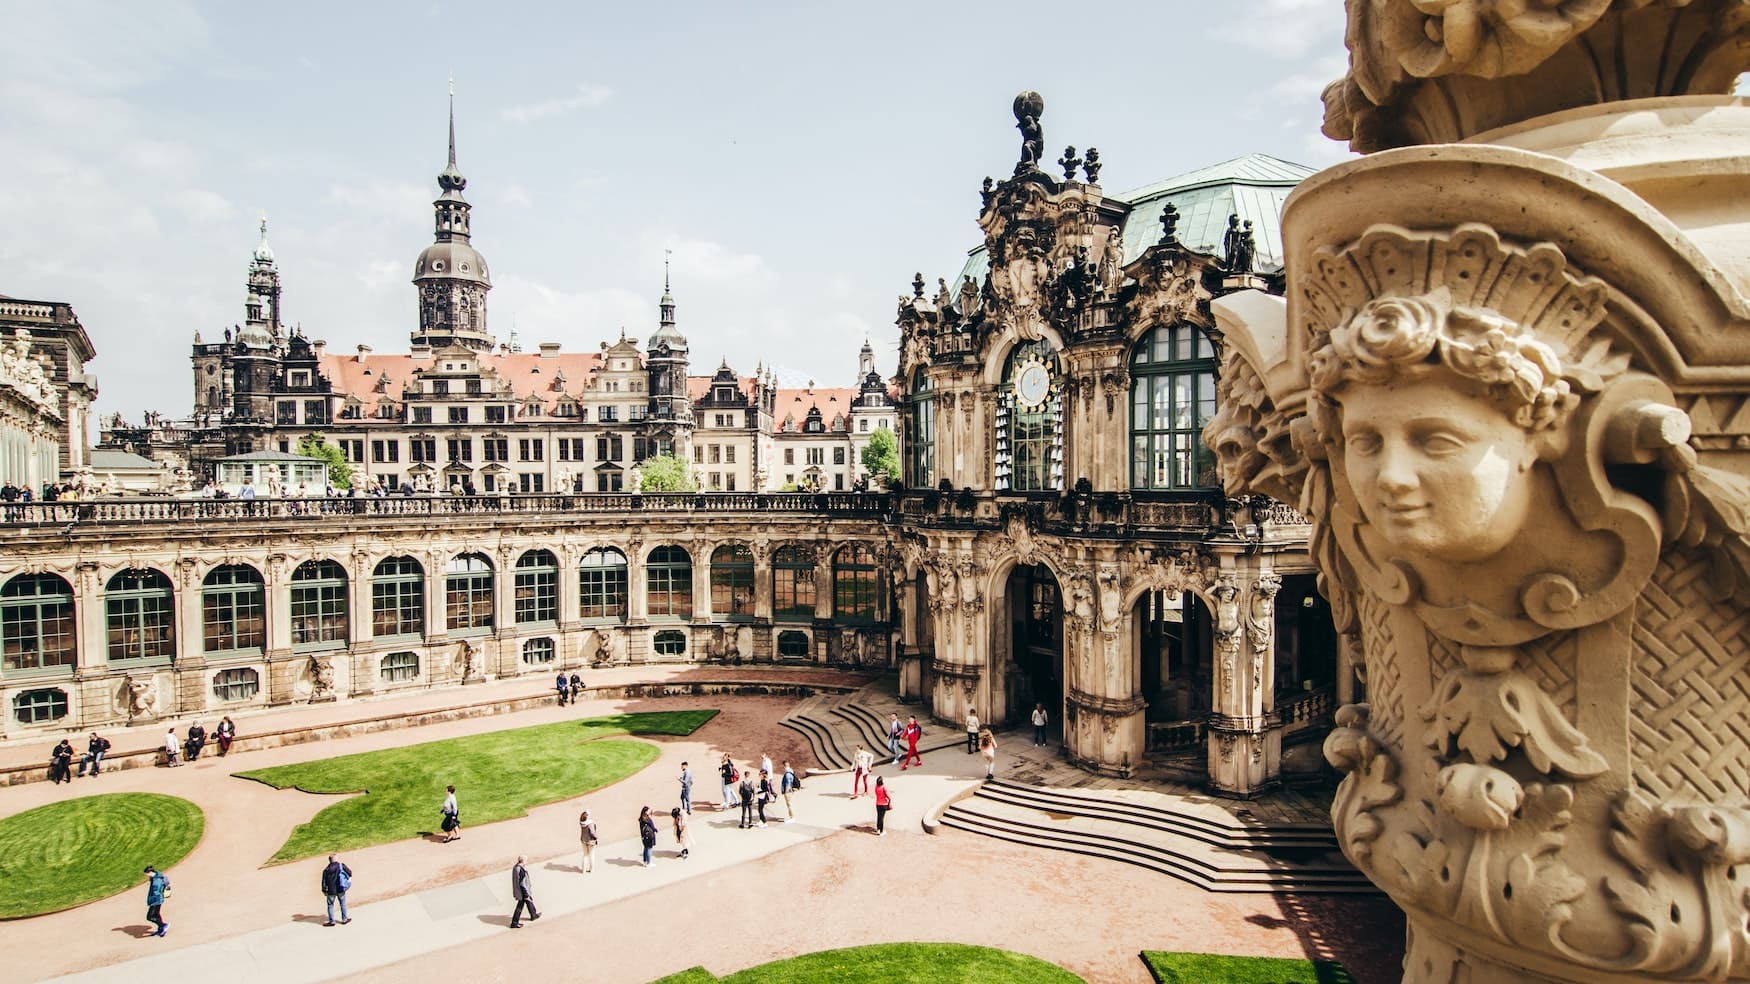 City center in Dresden